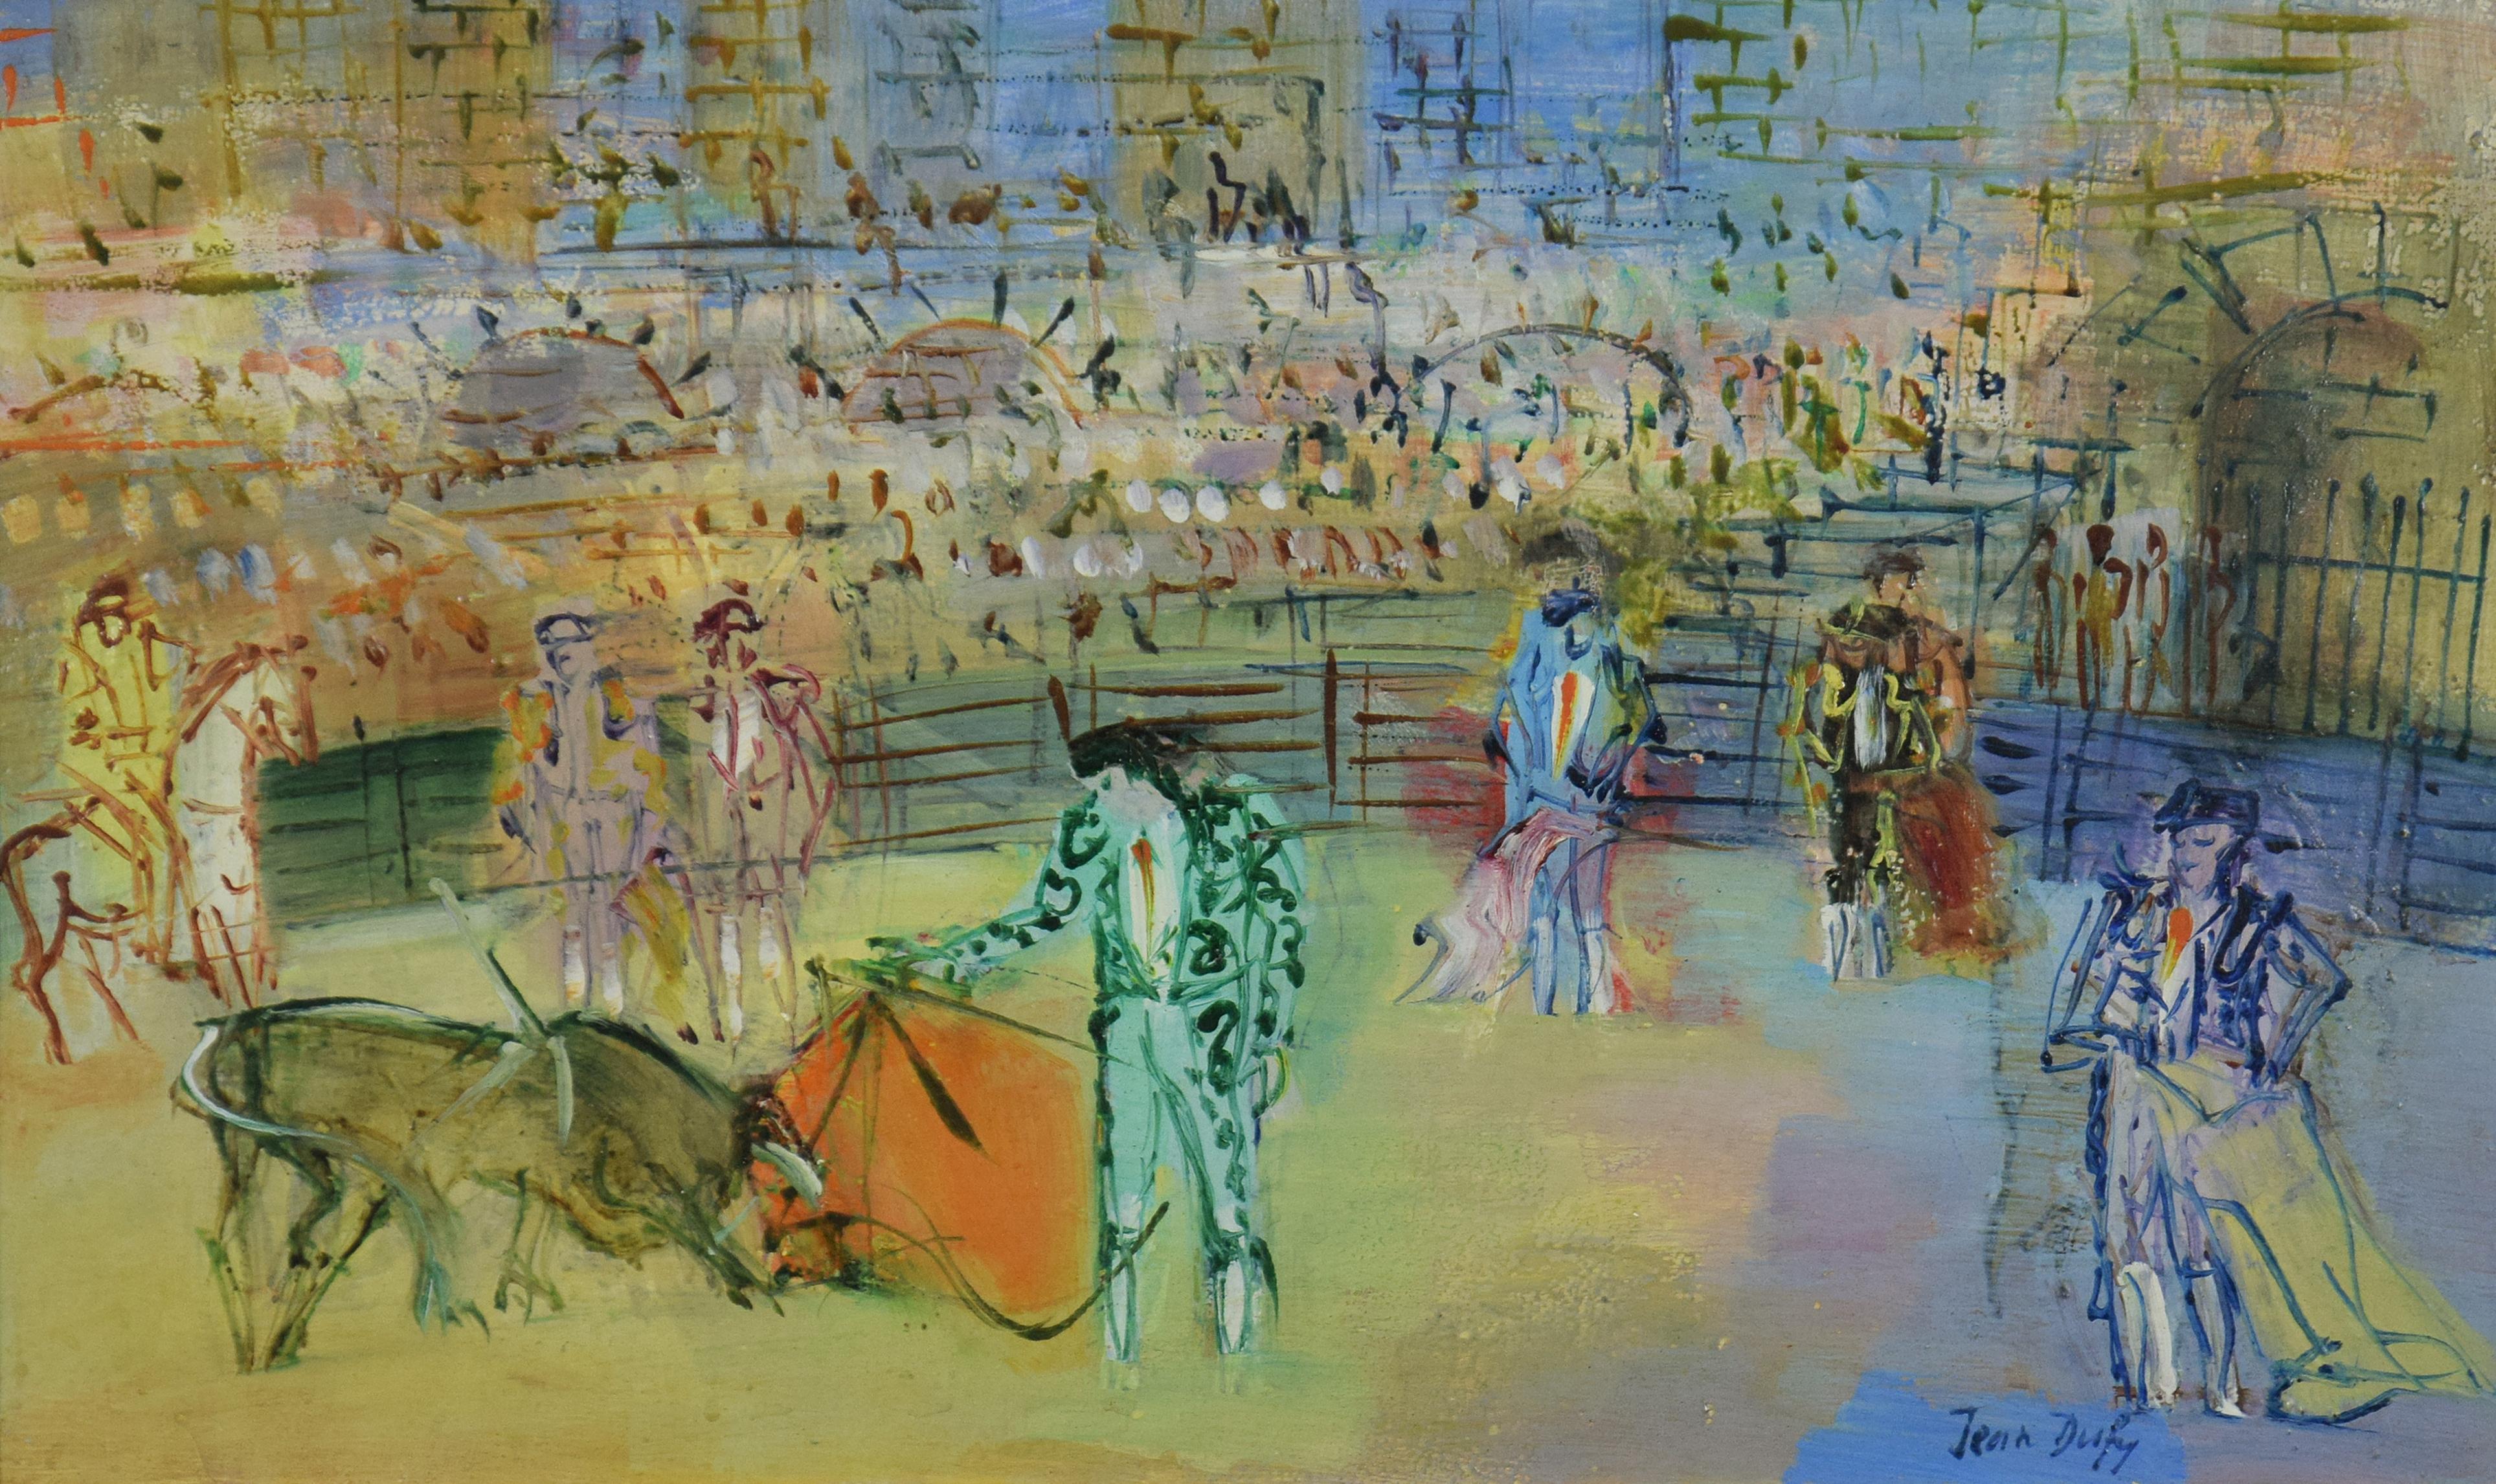 Corrida Espagnole by JEAN DUFY - Bullfighting scene, oil on canvas, modern art - Painting by Jean Dufy